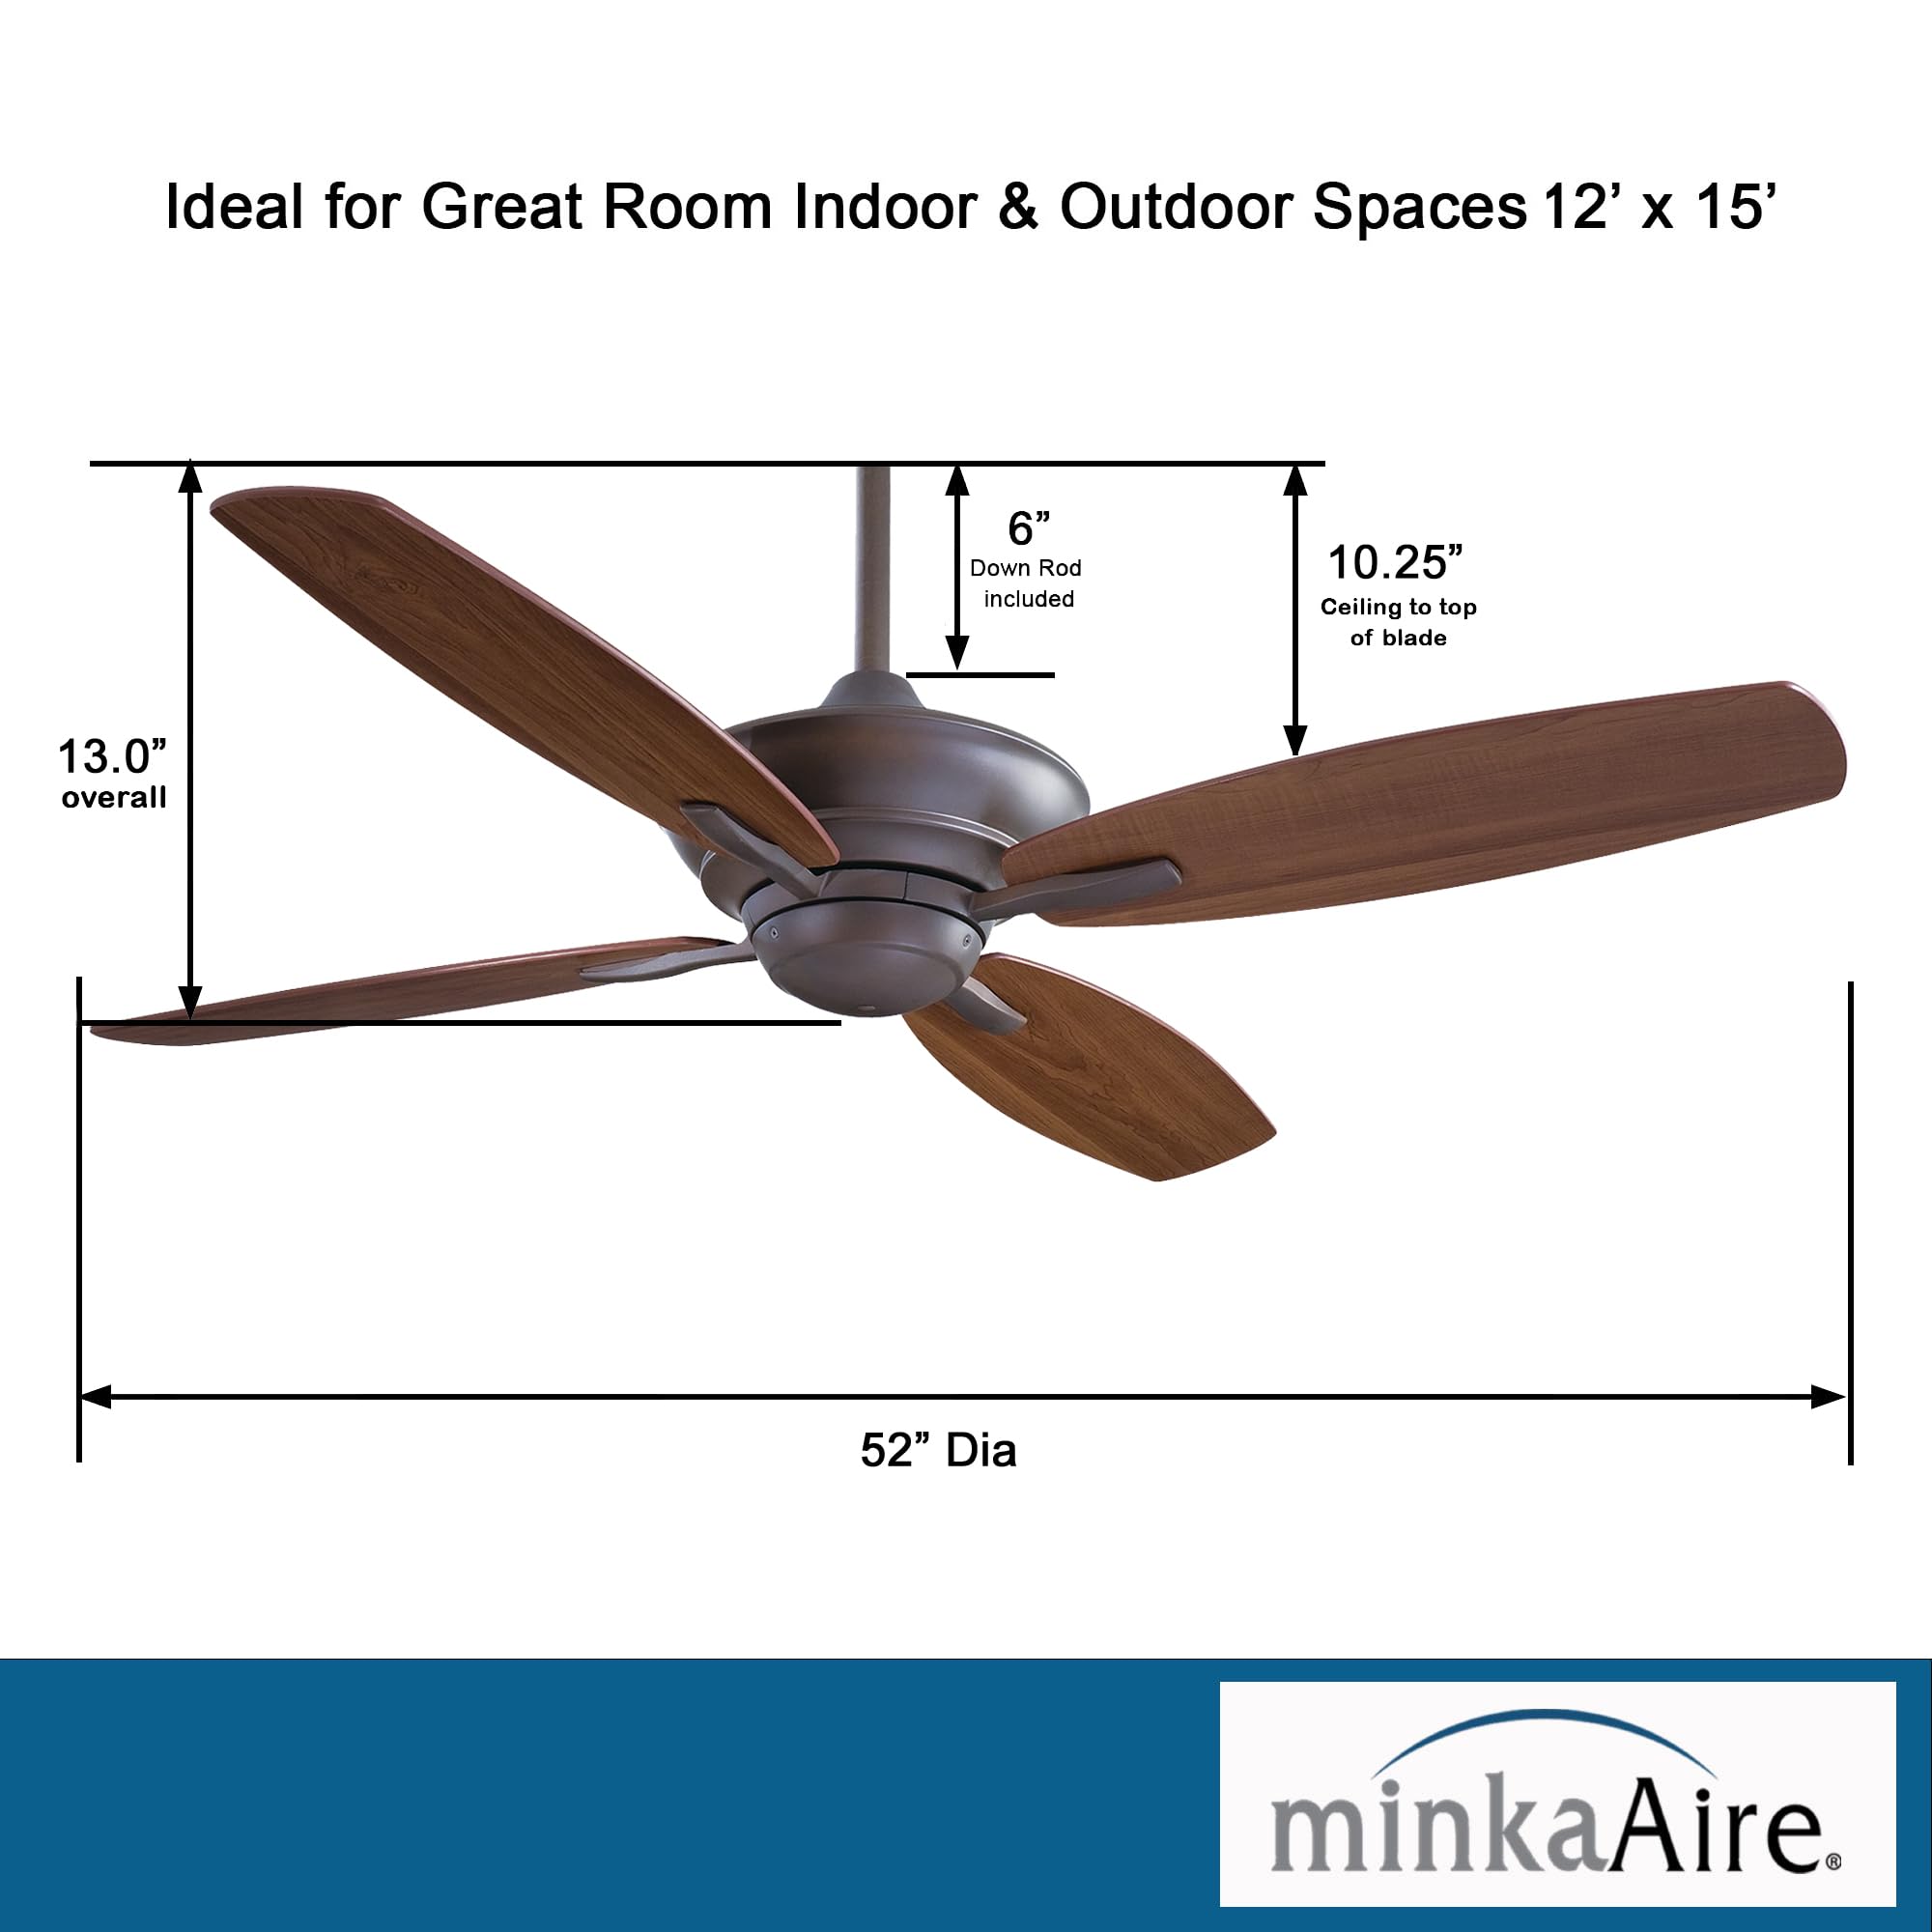 MINKA-AIRE F513-ORB New Era 52 Inch Ceiling Fan in Oil Rubbed Bronze Finish